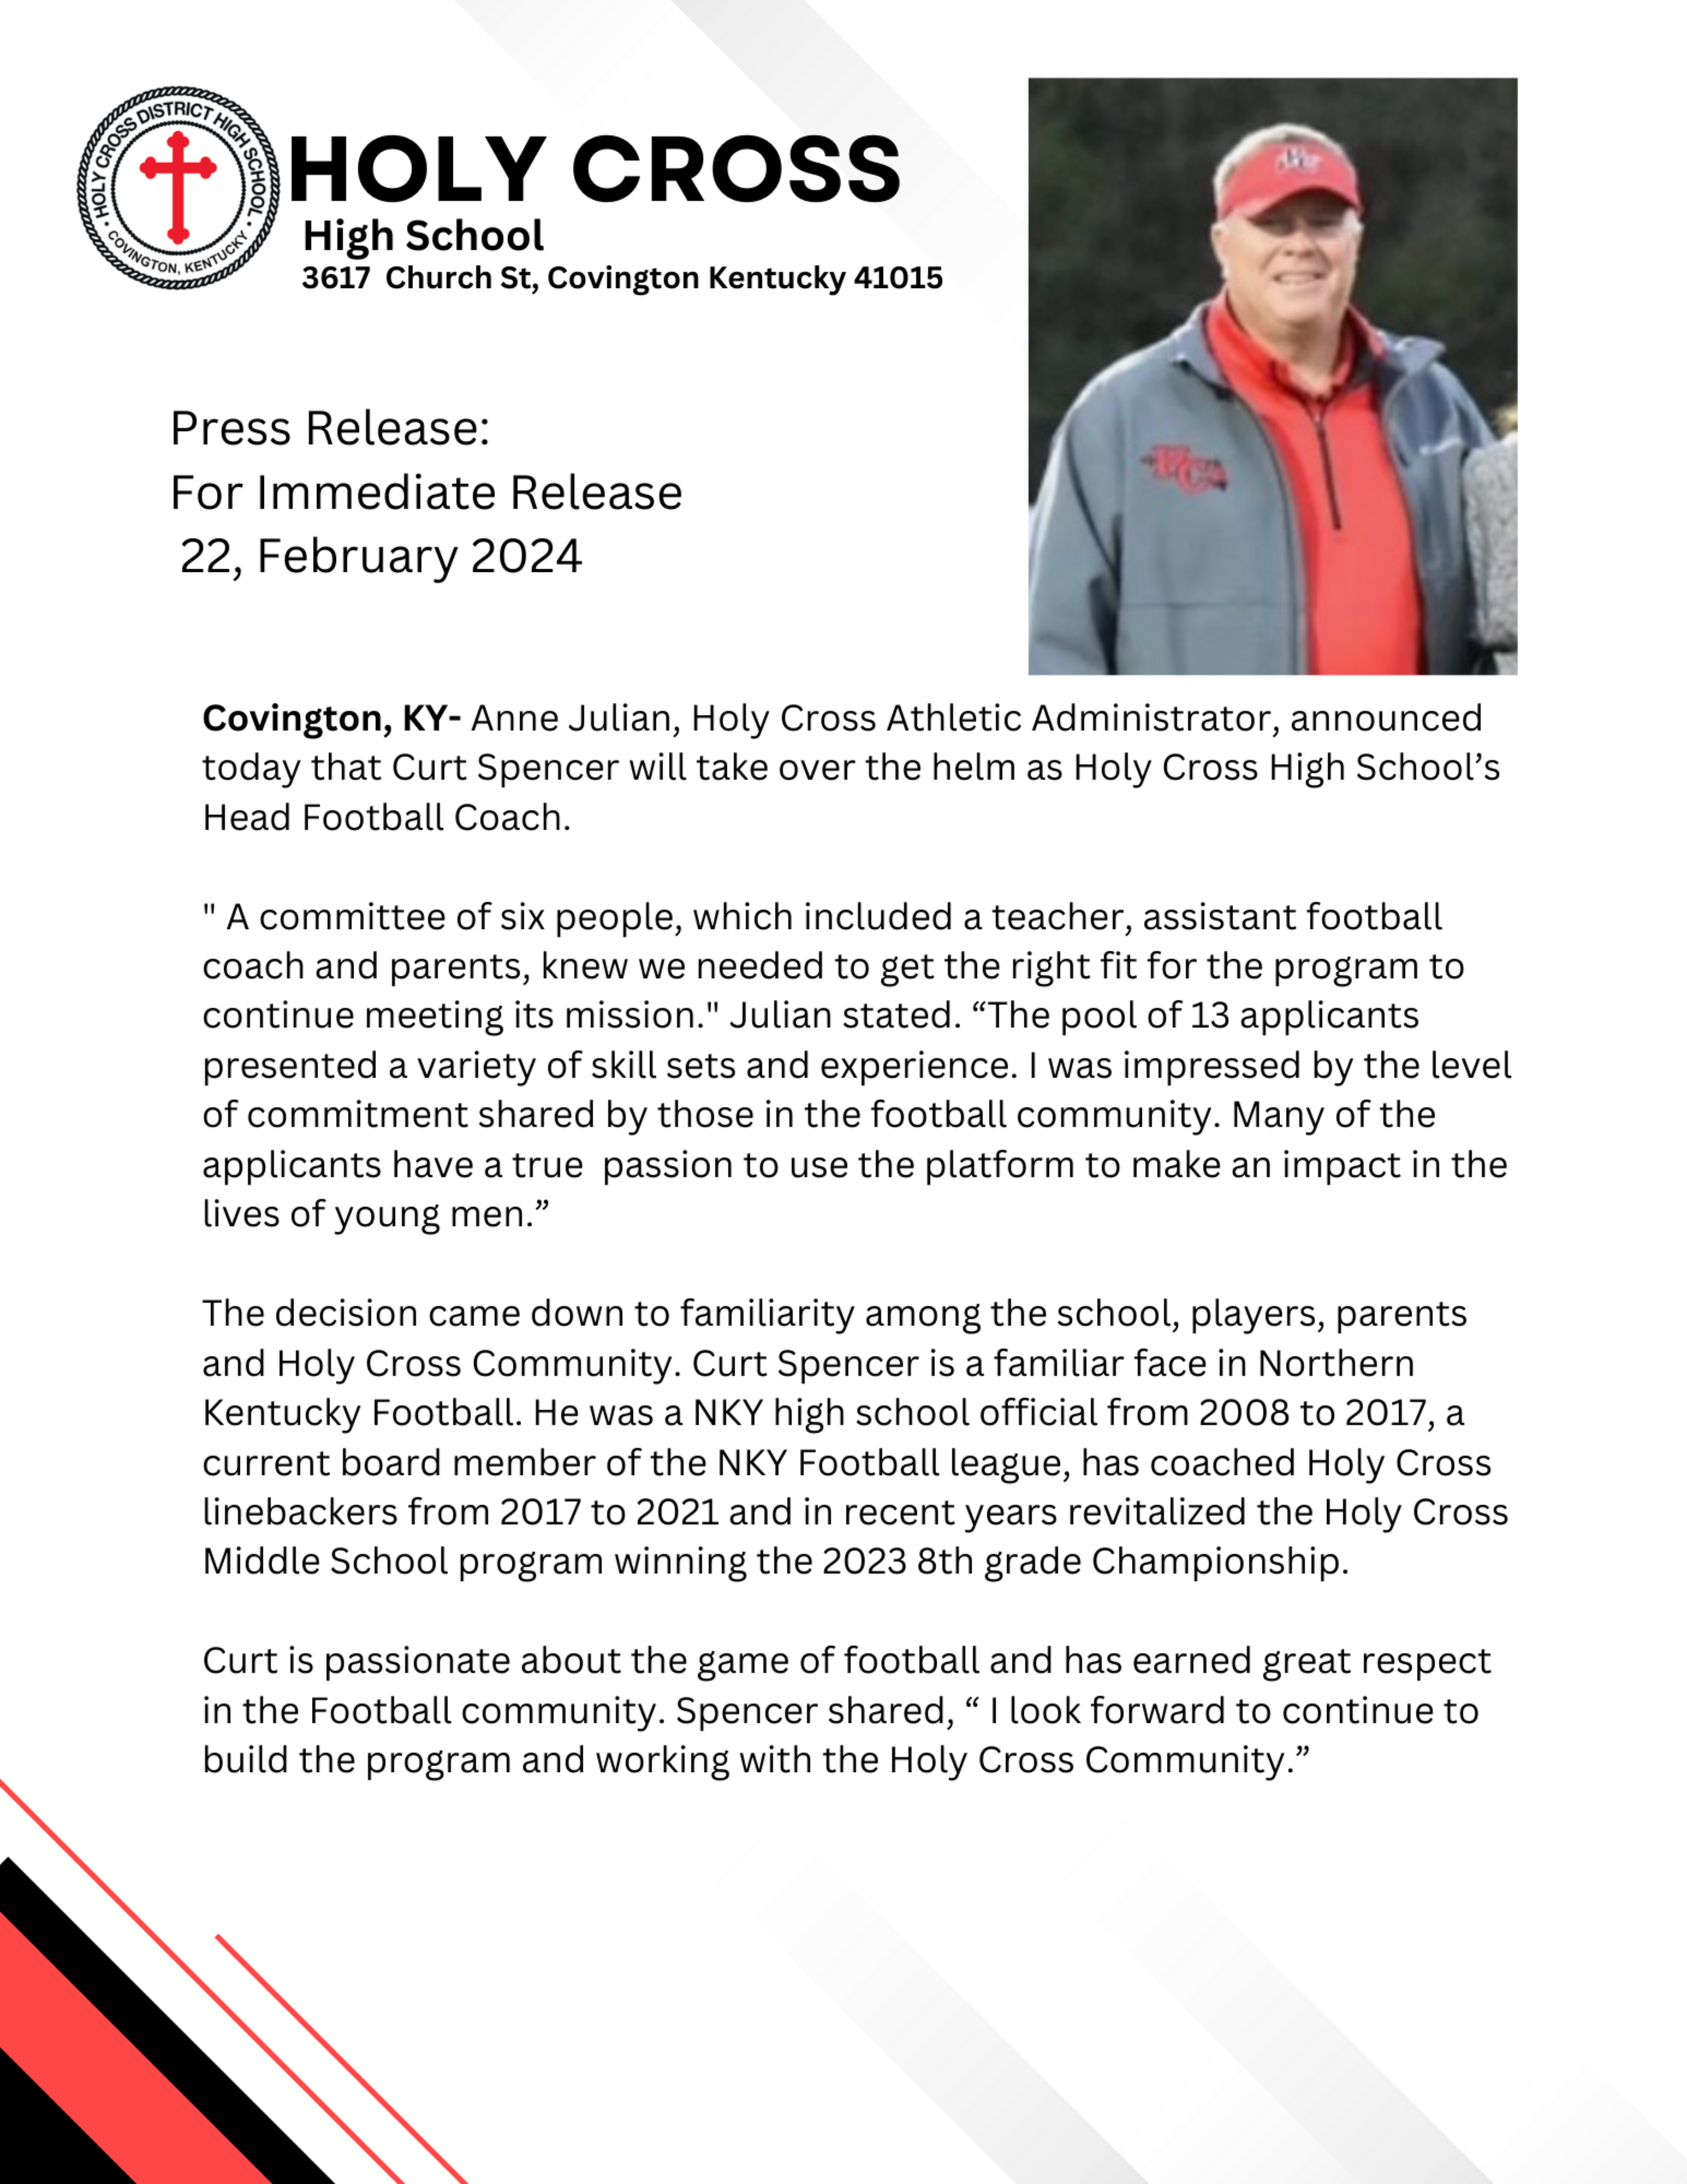 Press Release Football Coach